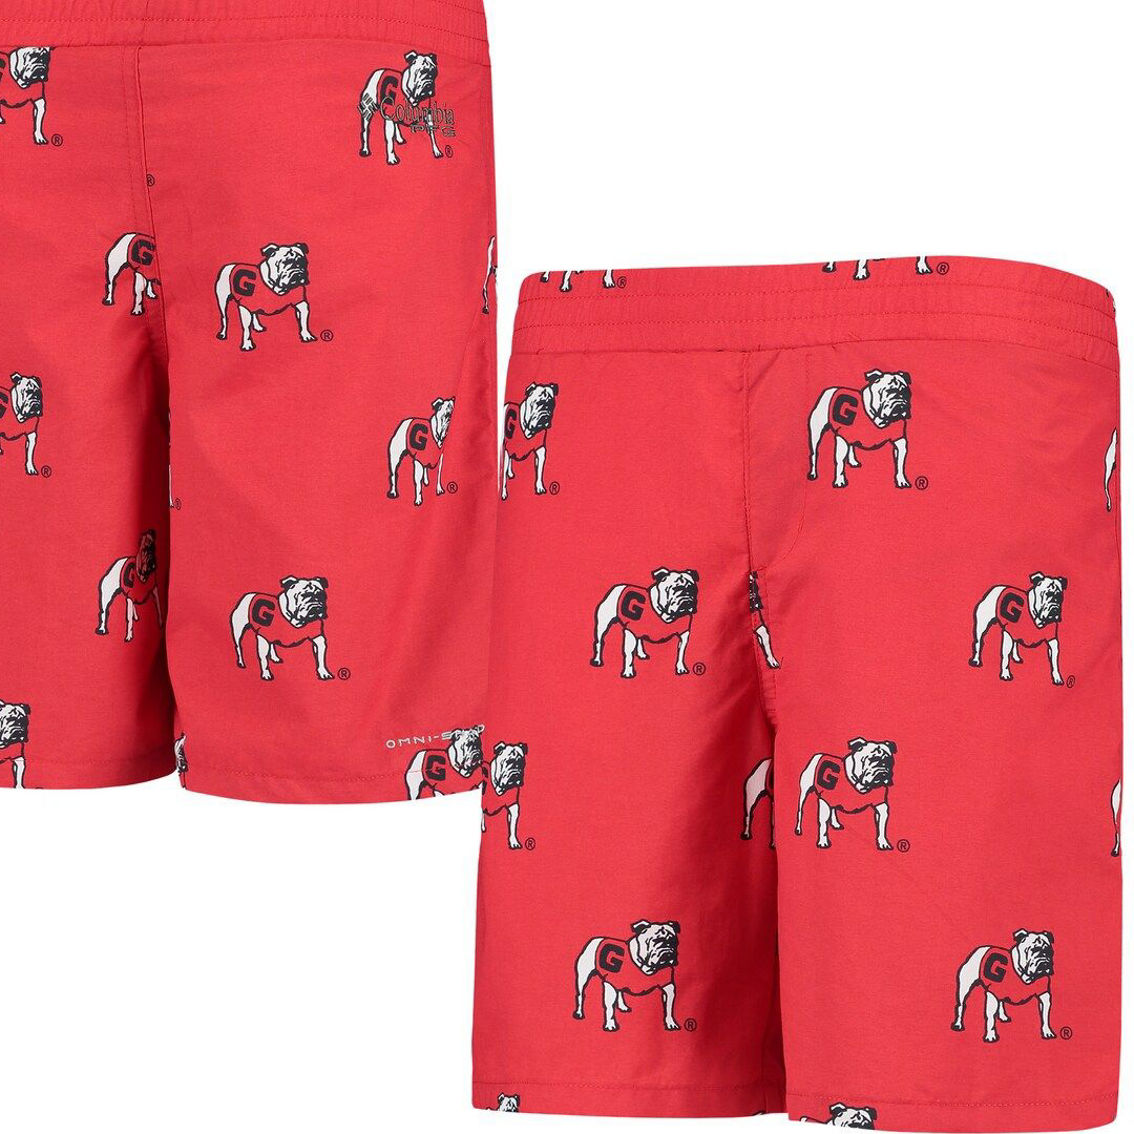 Columbia Youth Red Georgia Bulldogs Backcast Printed Omni-Shade Shorts - Image 2 of 4